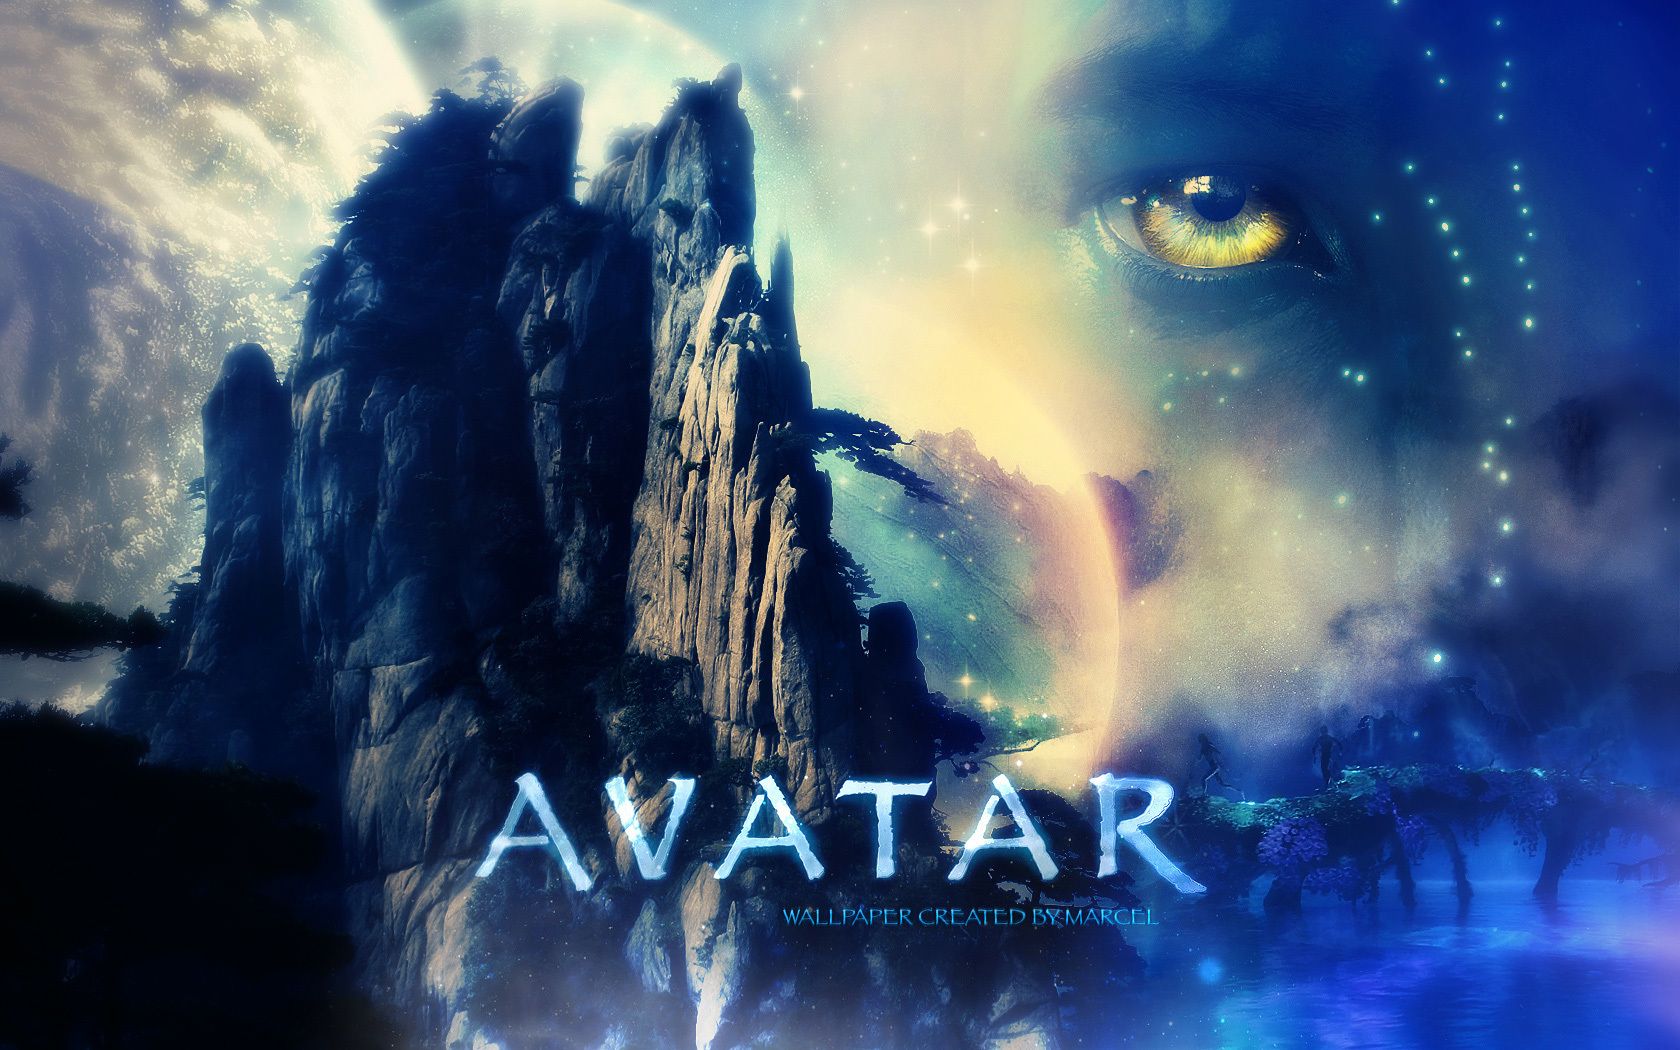 Avatar Poster 26: Full Size Poster Image